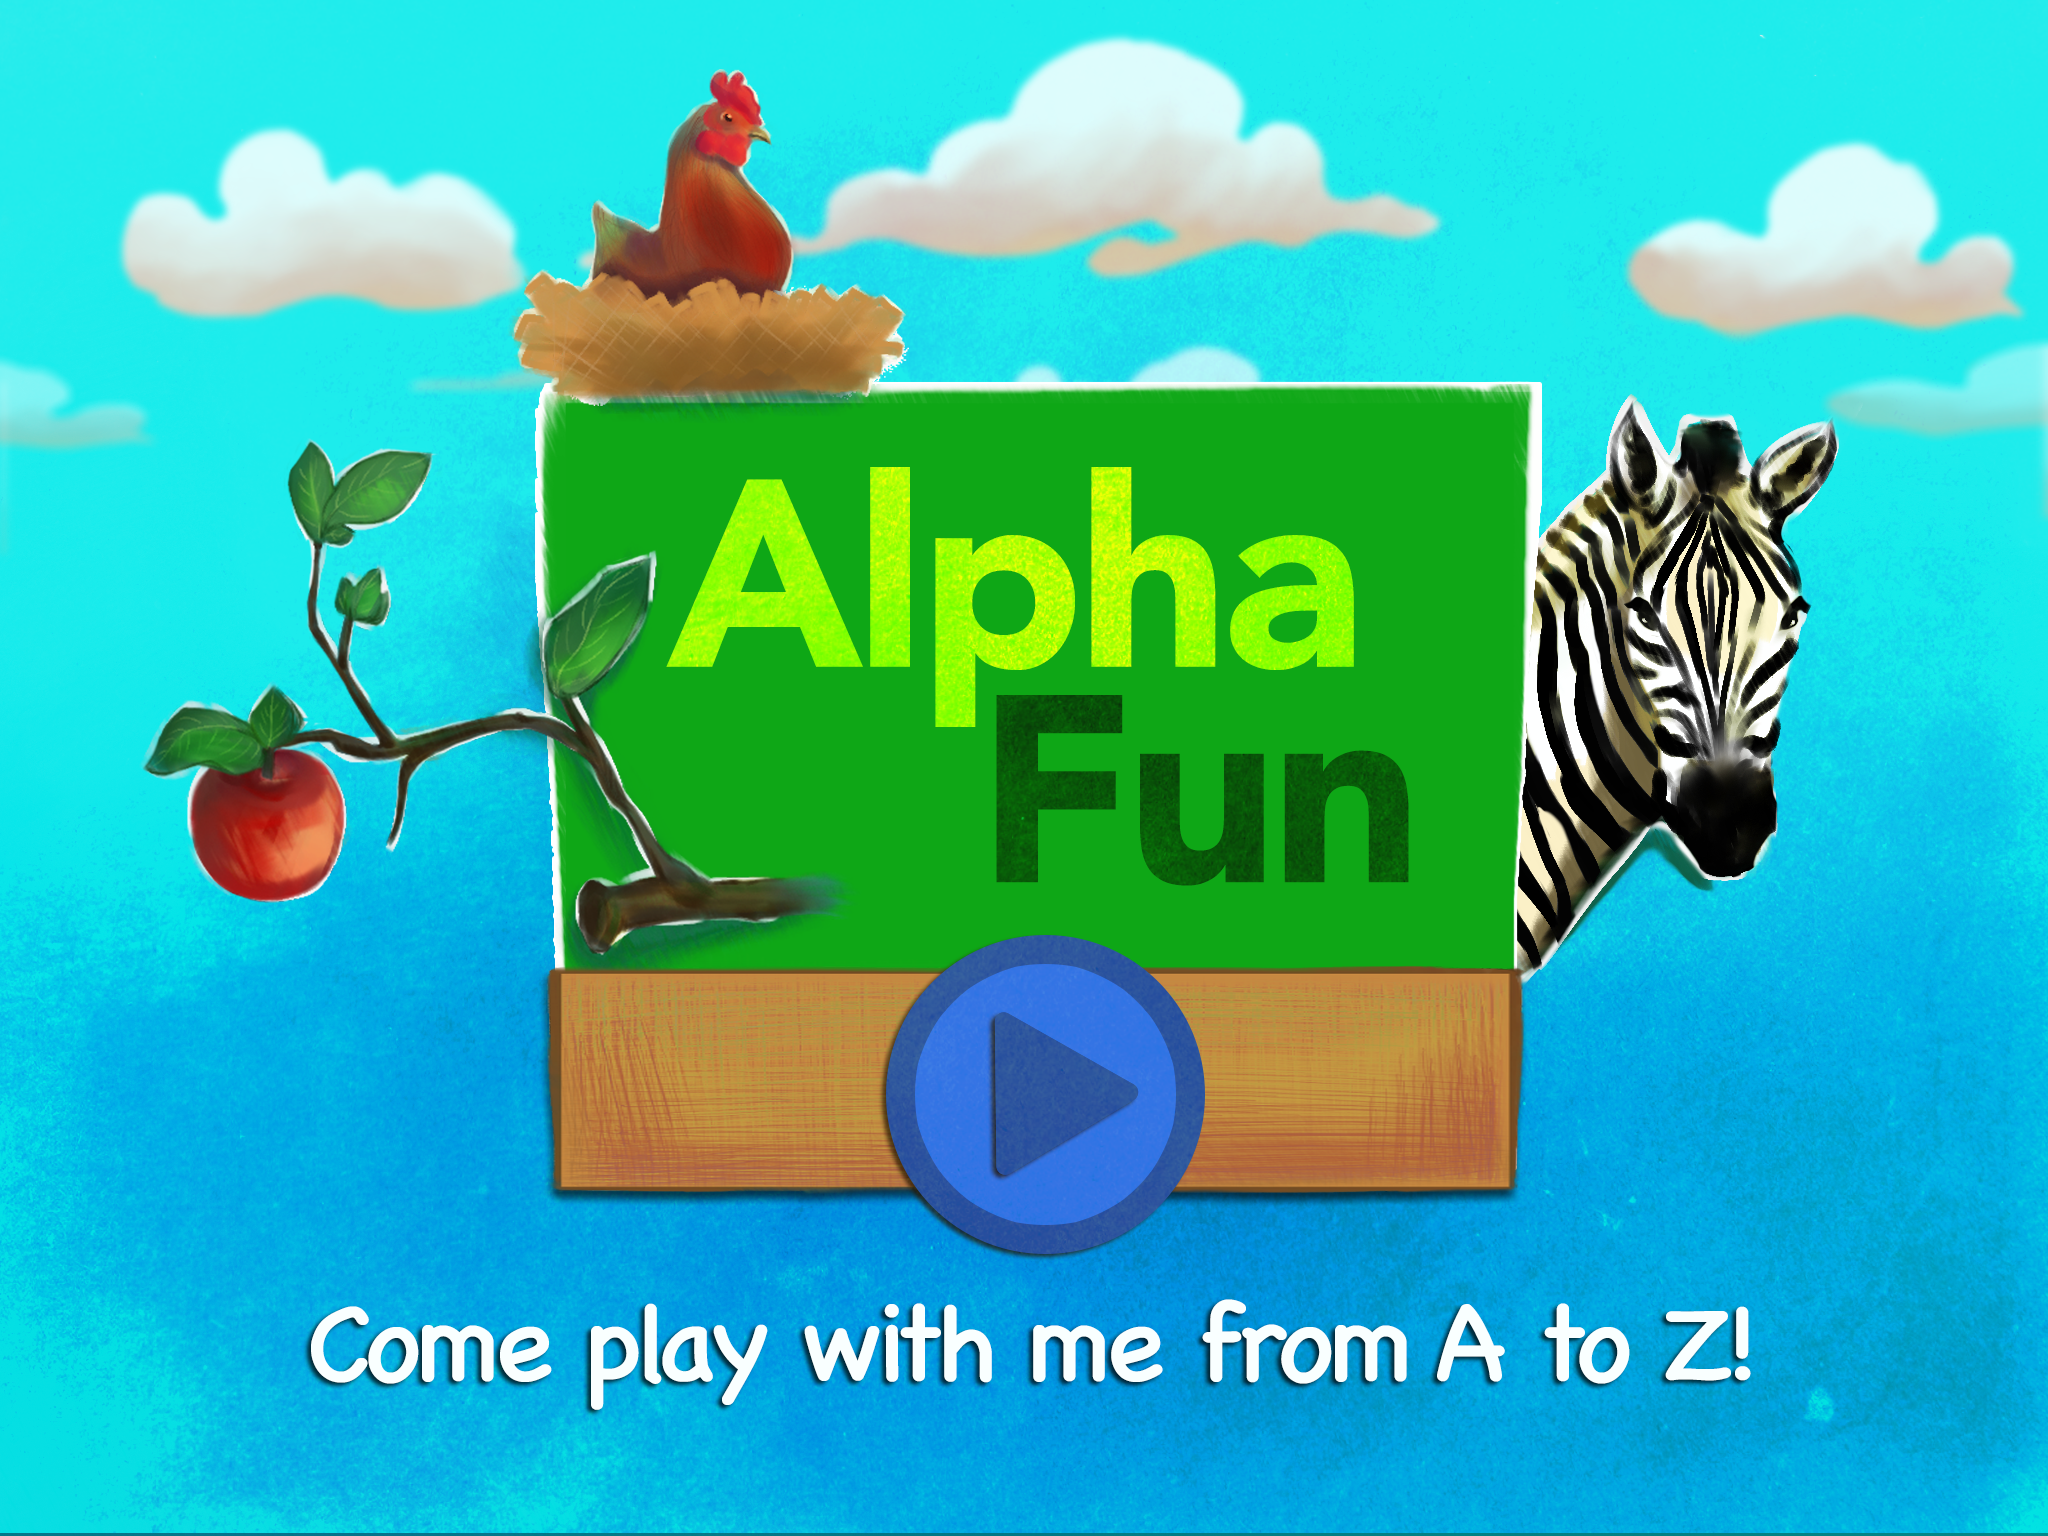 AlphaFun - Come play with me